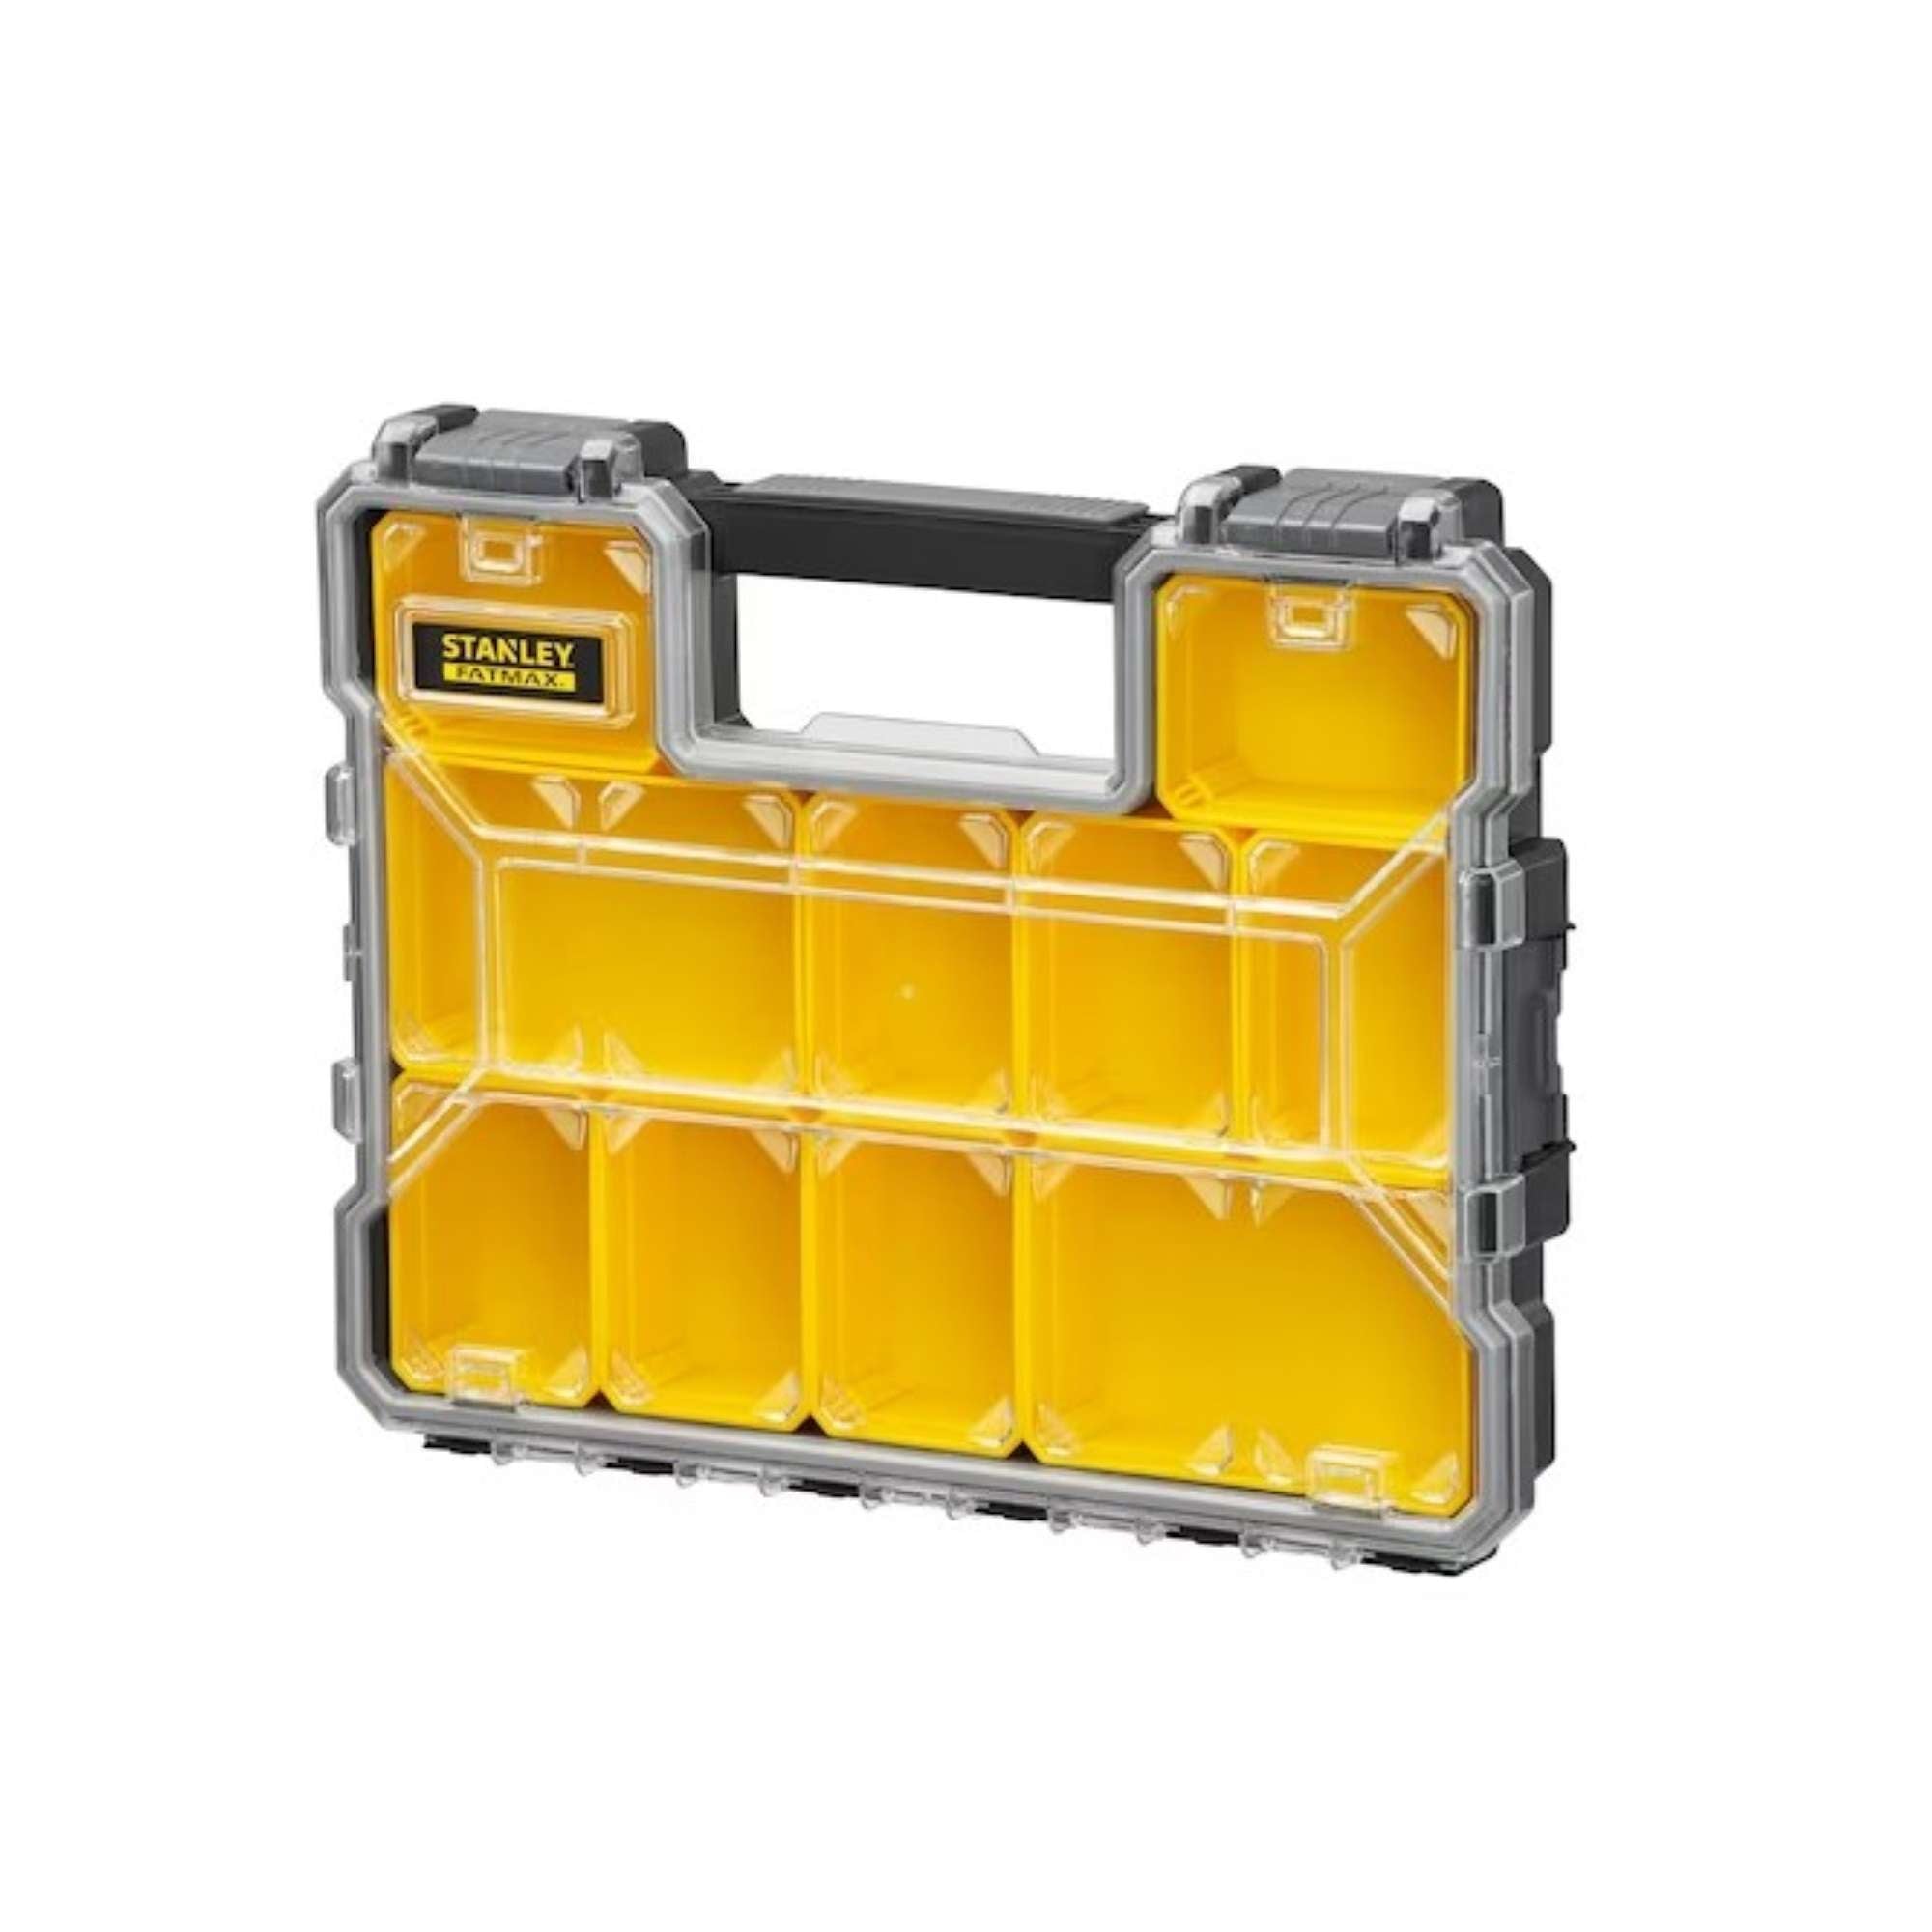 FATMAX Professional Low Organizer Tool Box - Stanley 1-97-519